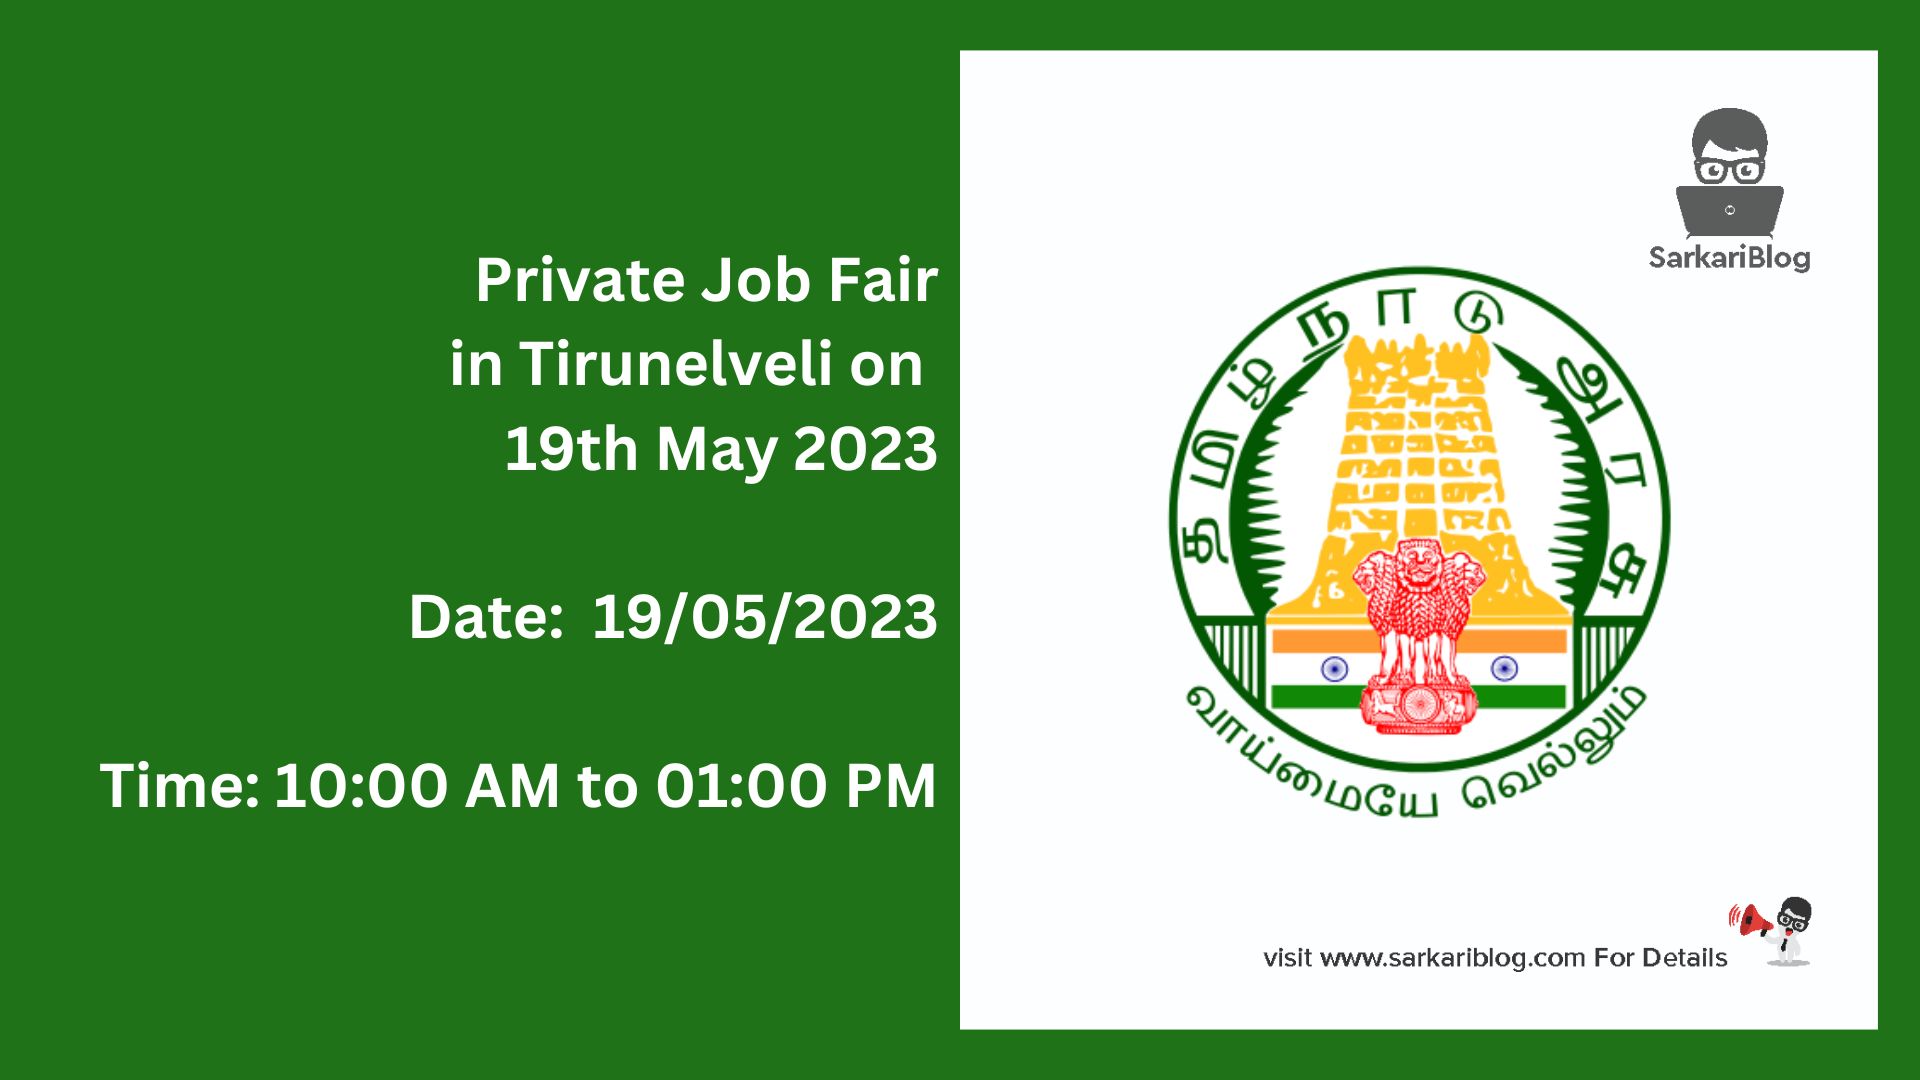 Private Job Fair in Tirunelveli on 19th May 2023